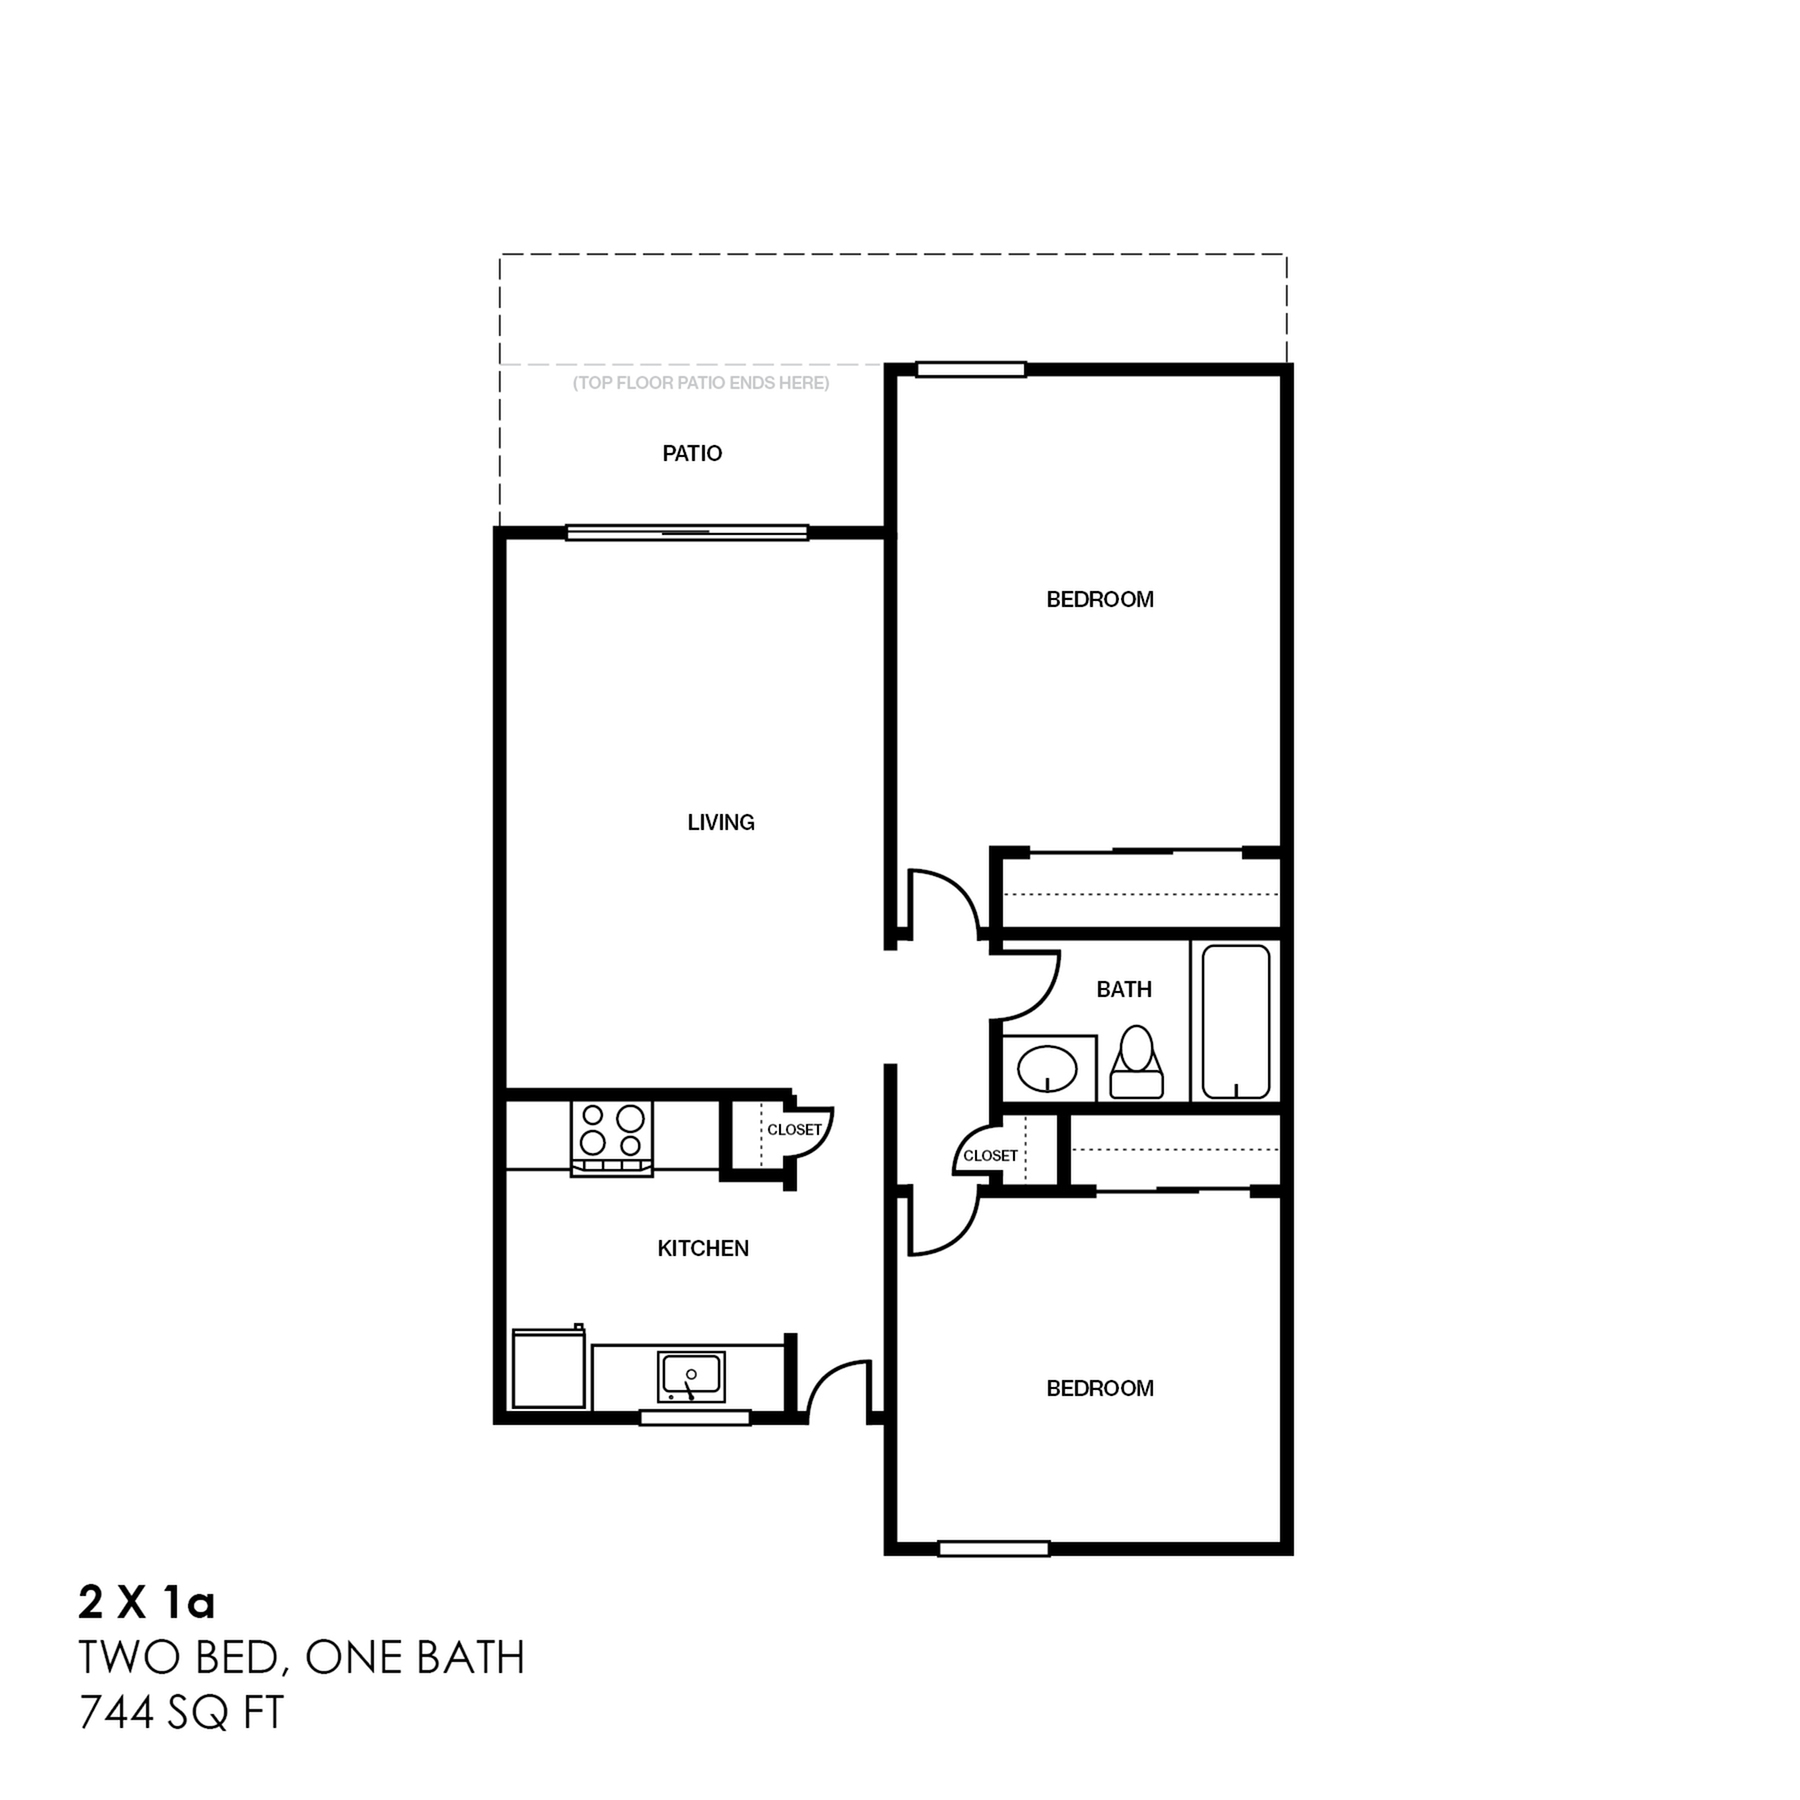 2x1a Two bedroom 1- bath floor plan - 744 total sq. ft.